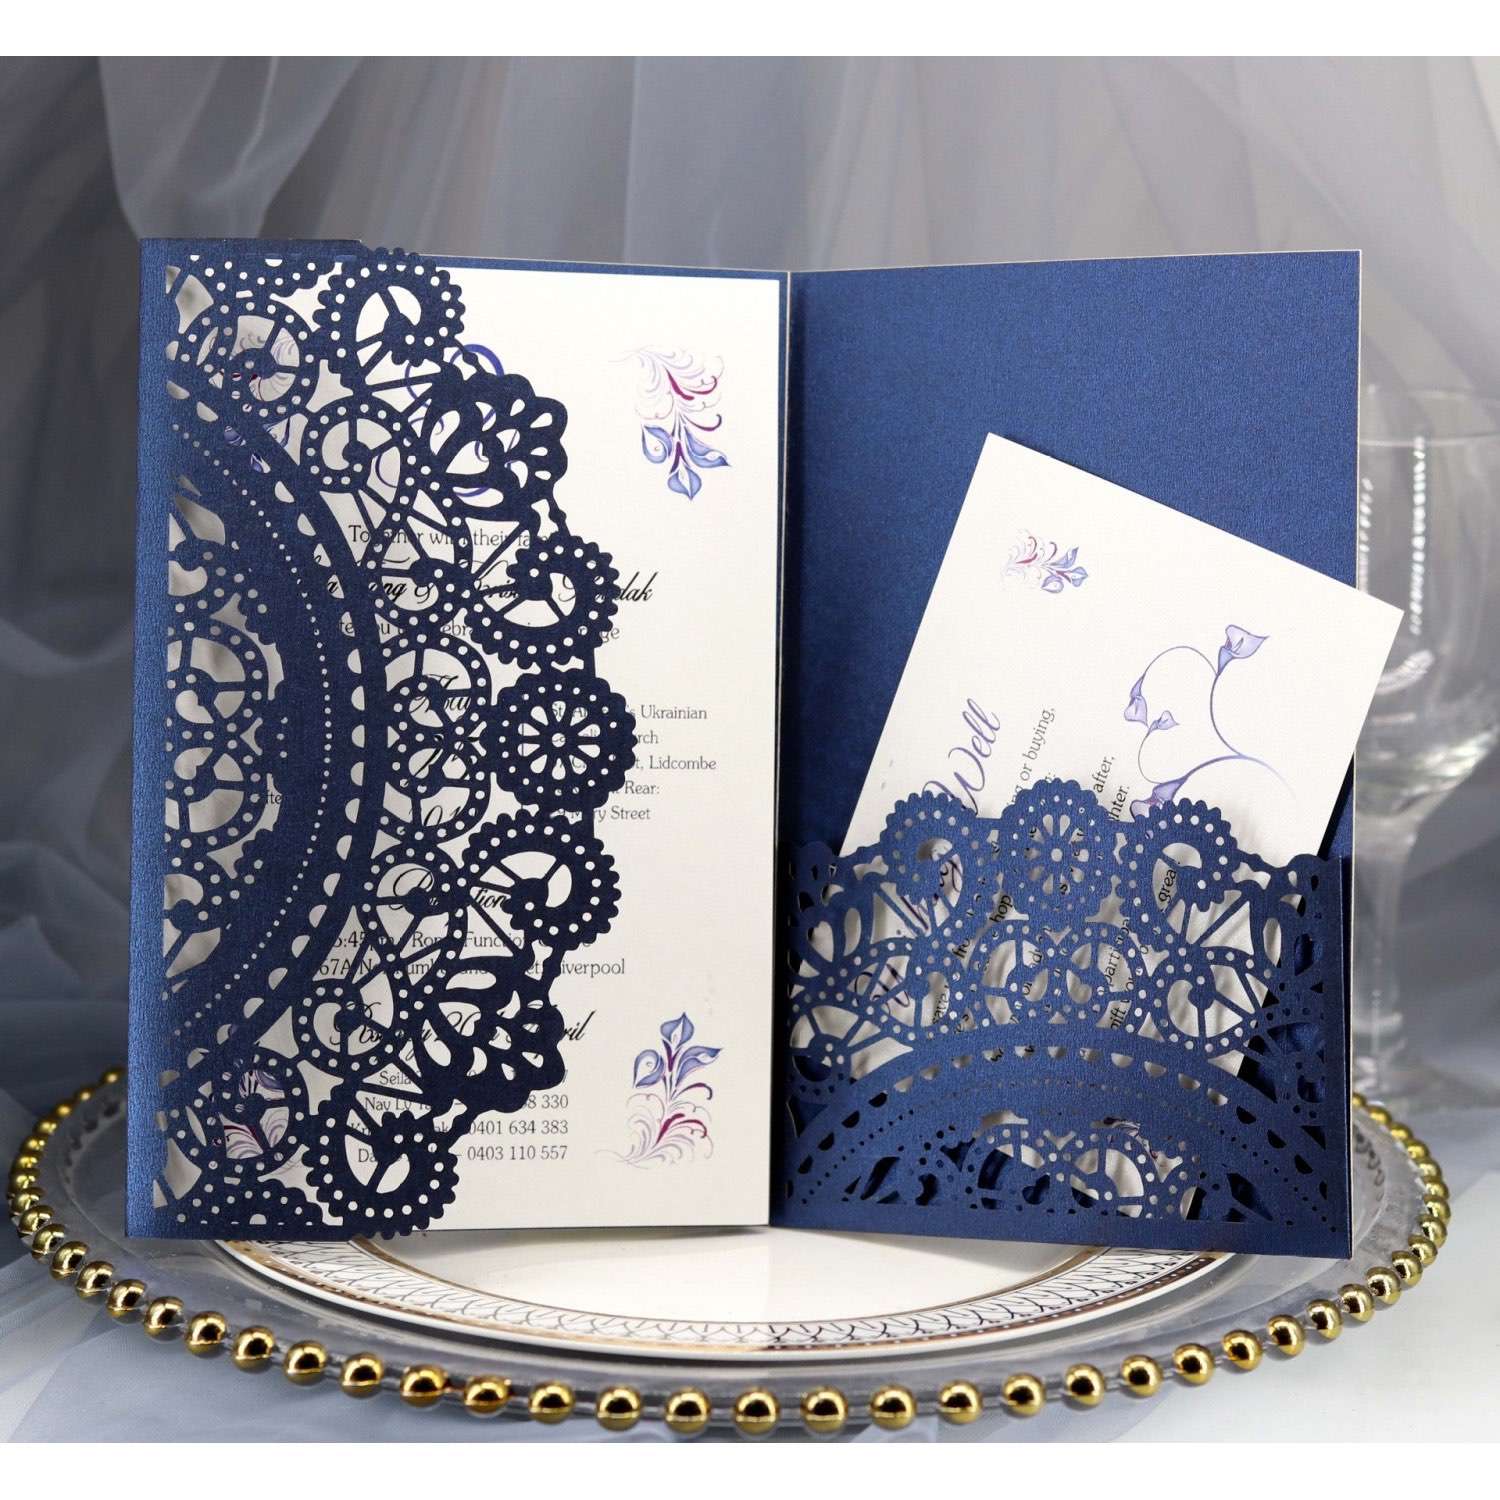 Slap-up Marriage Invitation Card Business Invitation Laser Wedding Cards